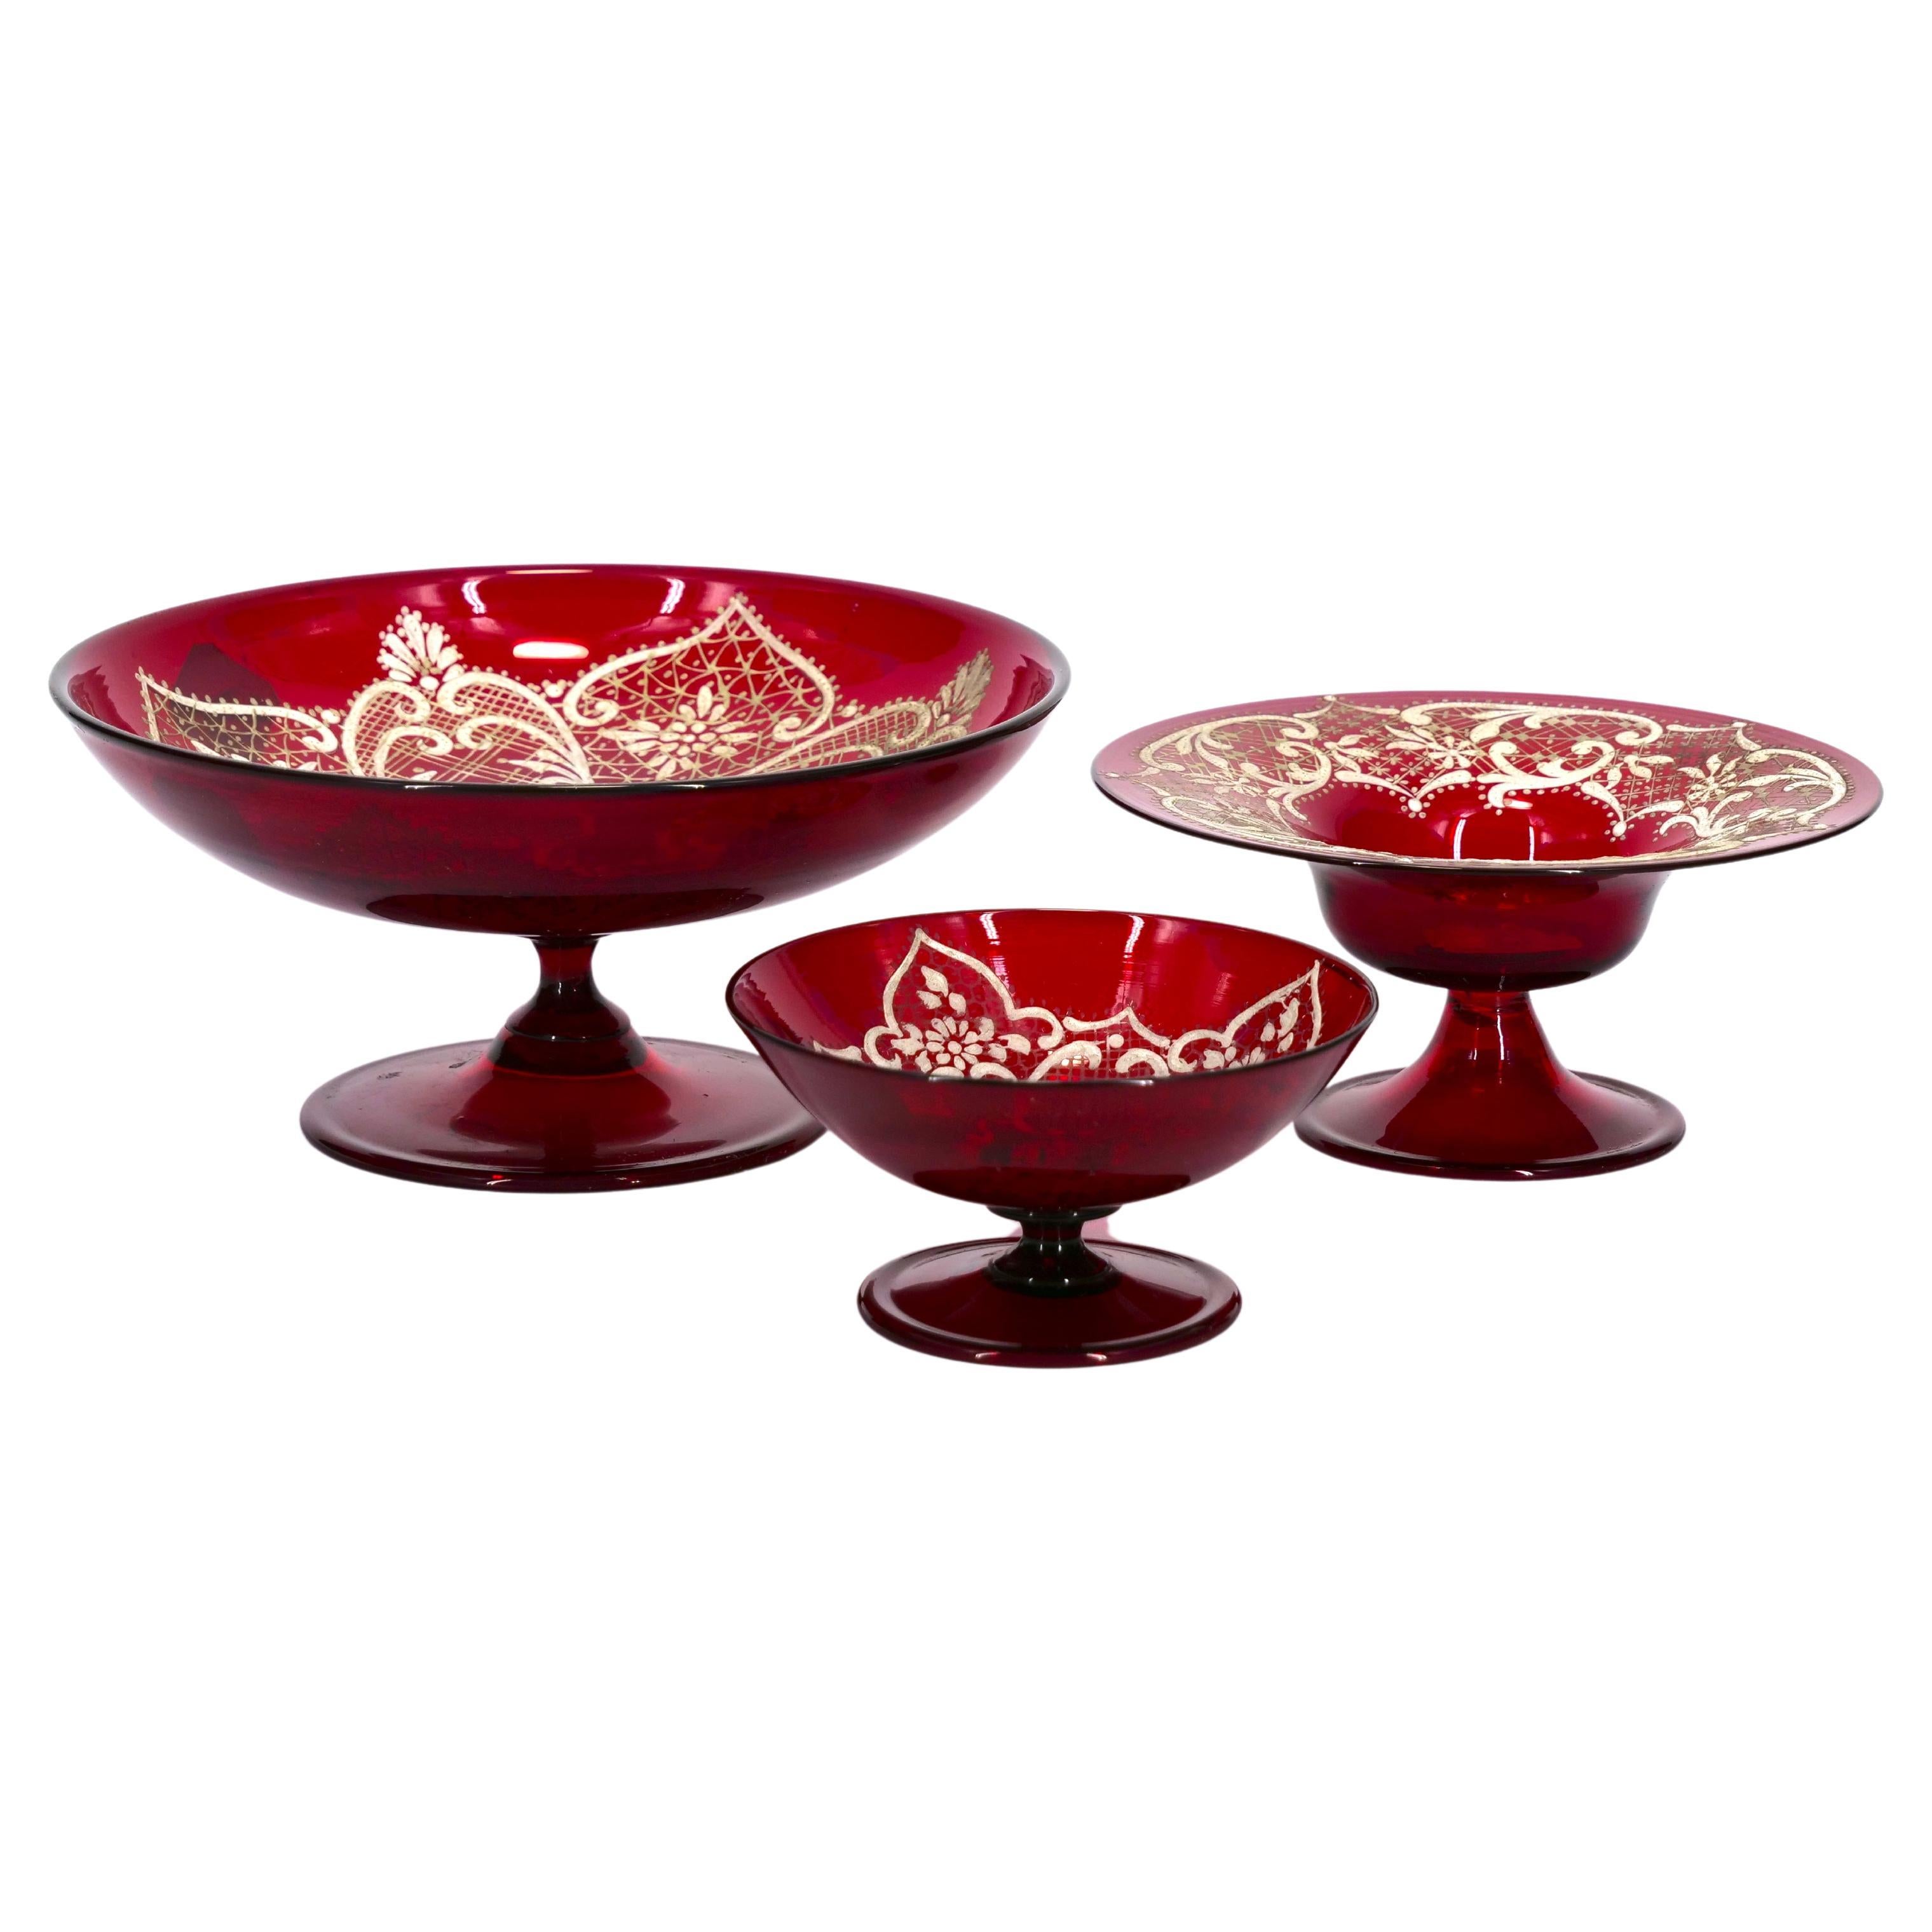 Drei dekorative Kompottschalen aus Muranoglas aus dem 19. Jahrhundert